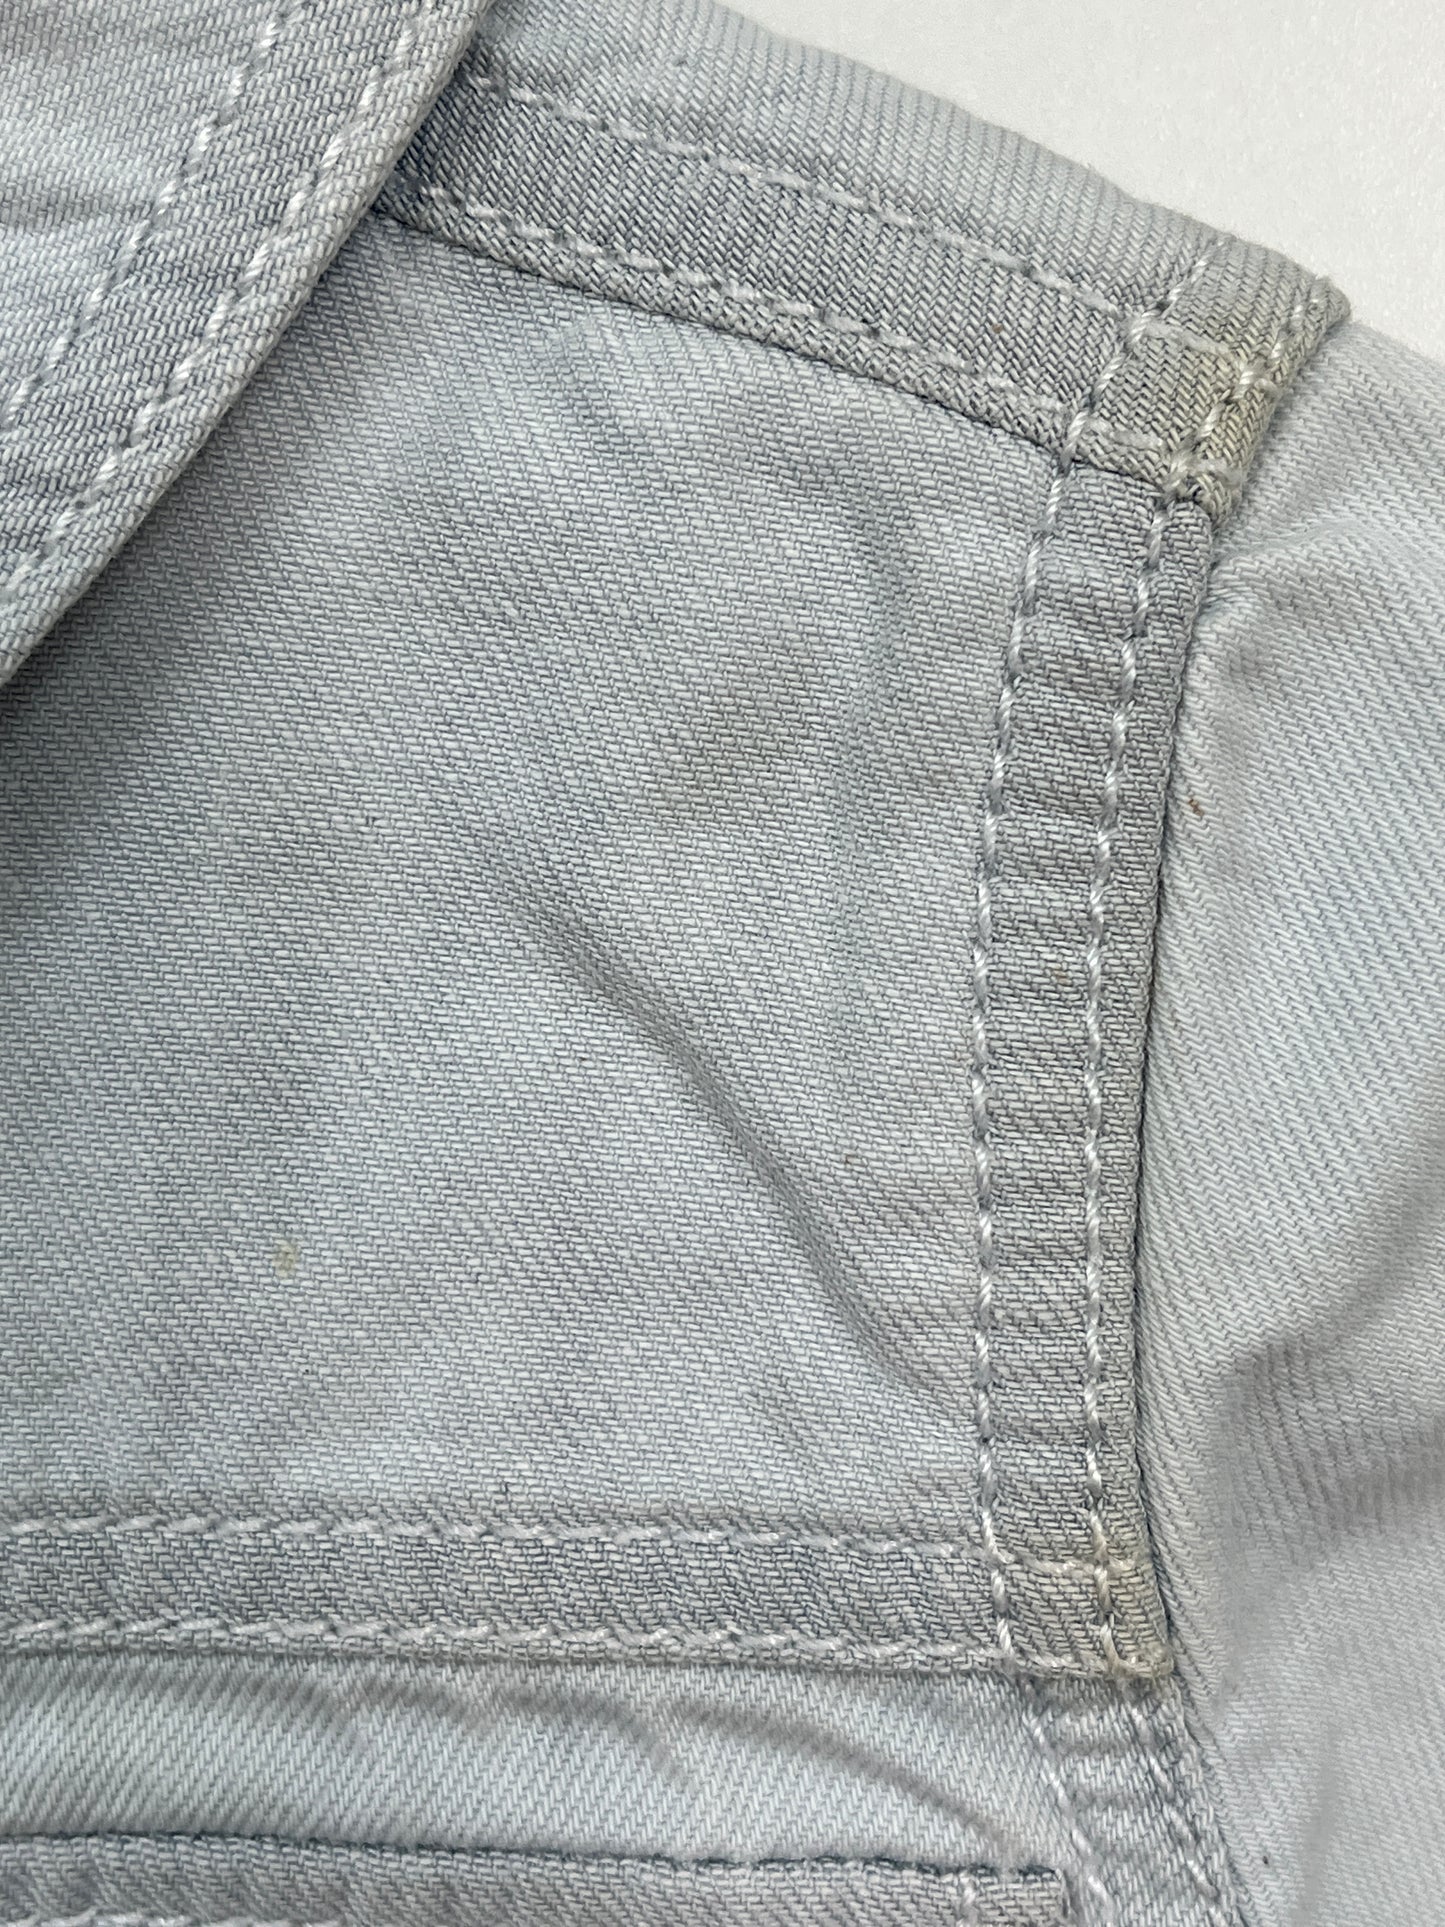 CHLOE Blue Denim Jacket 9-12 Months